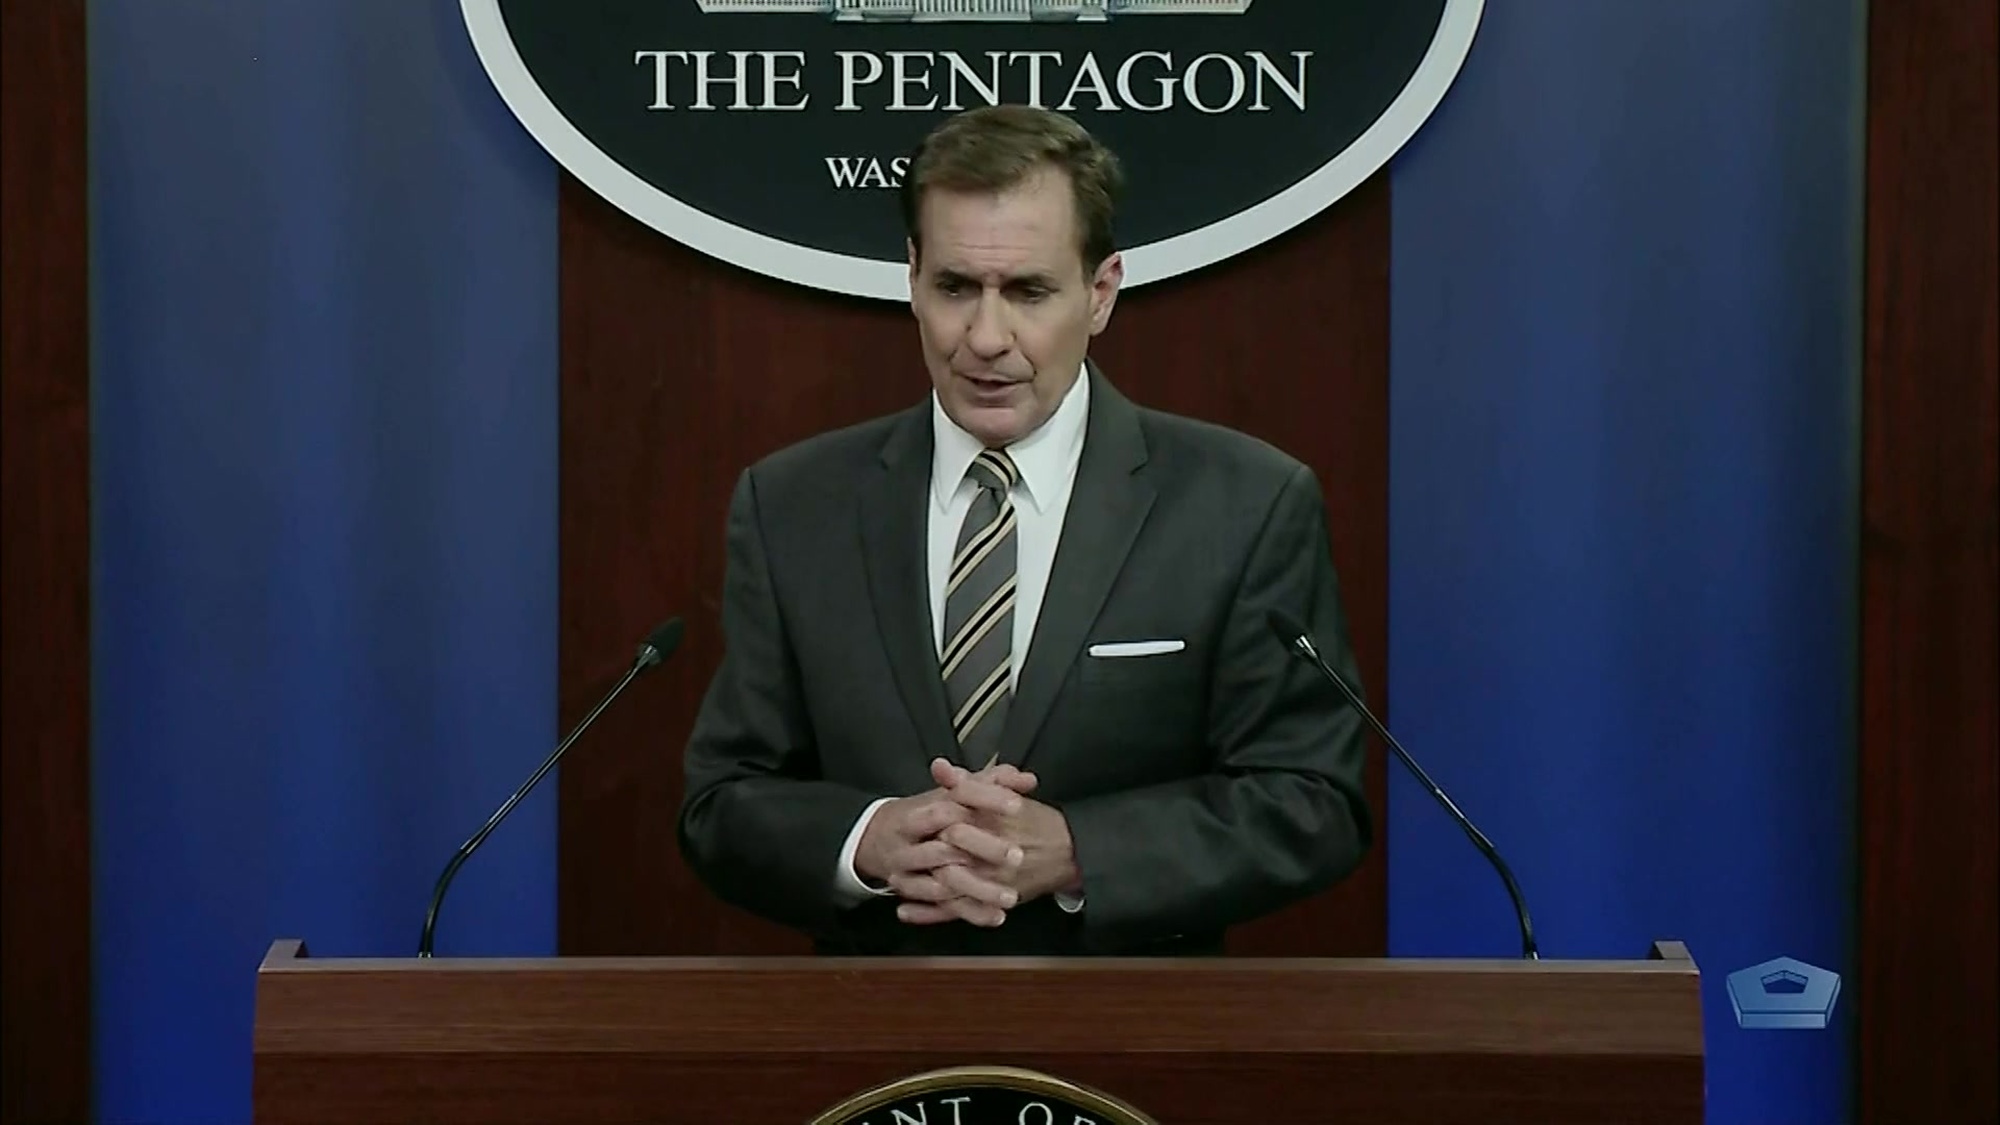 Pentagon press secretary speaks at a lectern.